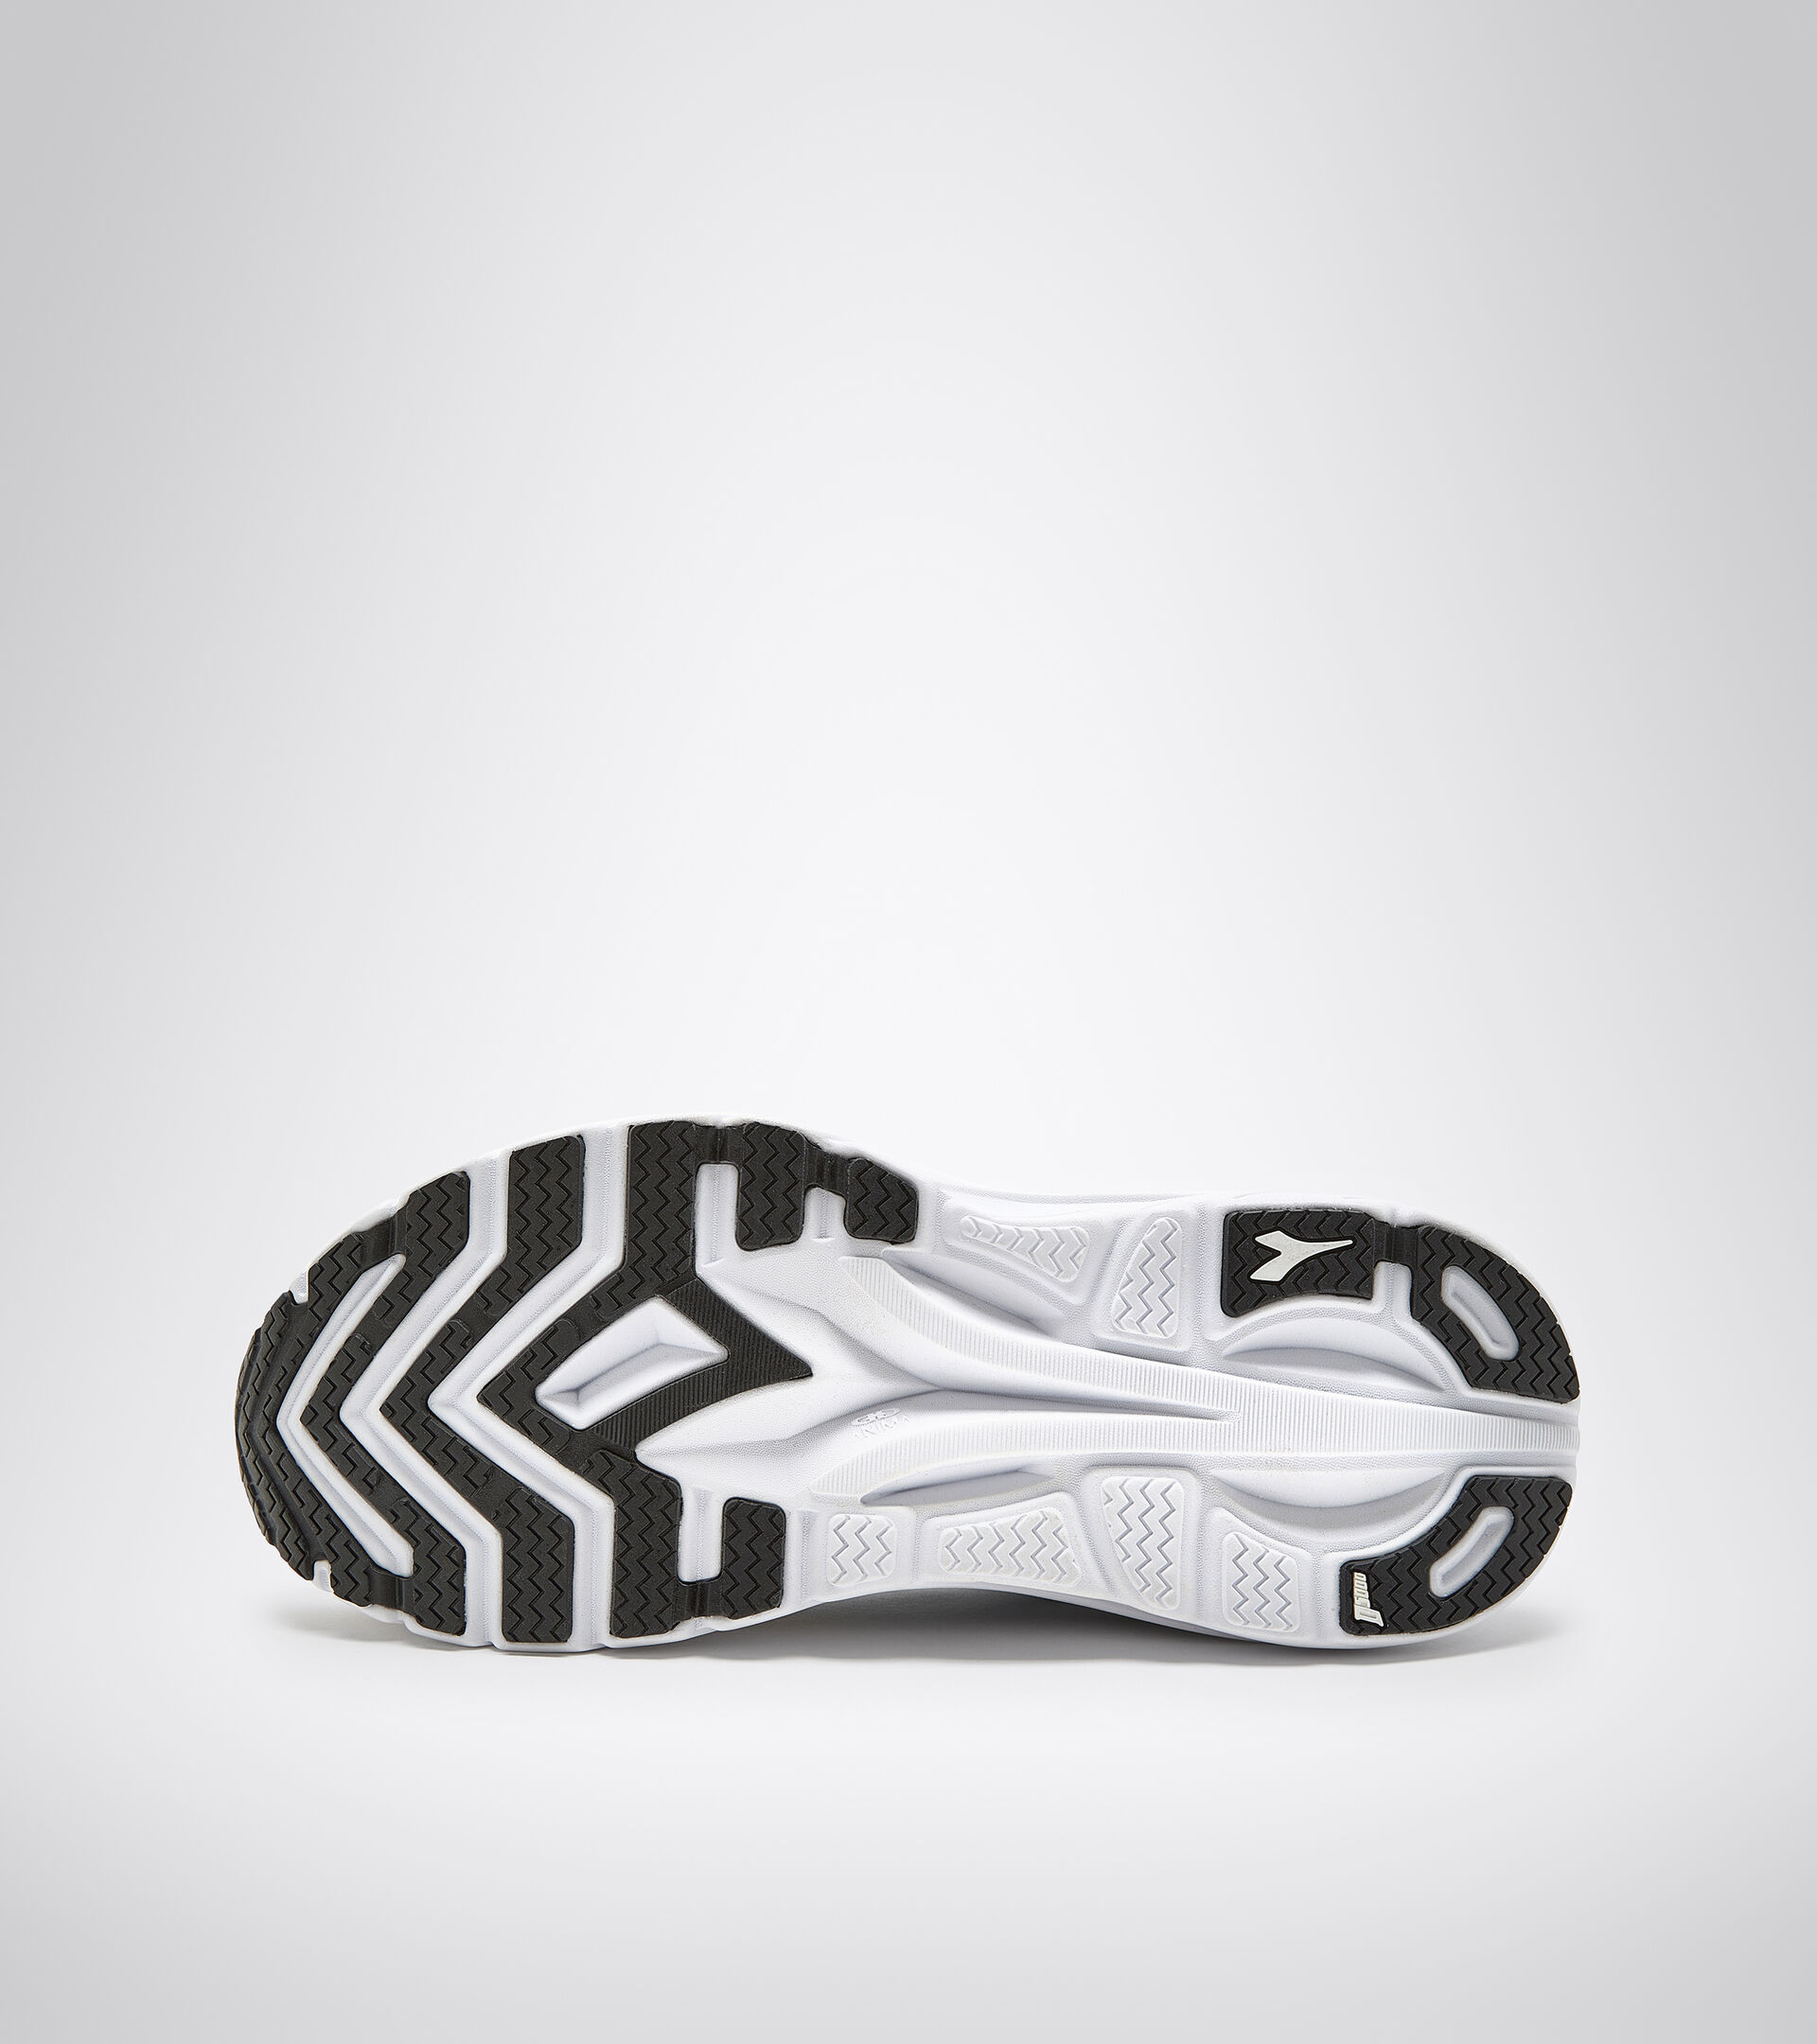 Made in Italy - Running shoes - Men’s EQUIPE ATOMO WHITE/GOLD/BLACK - Diadora